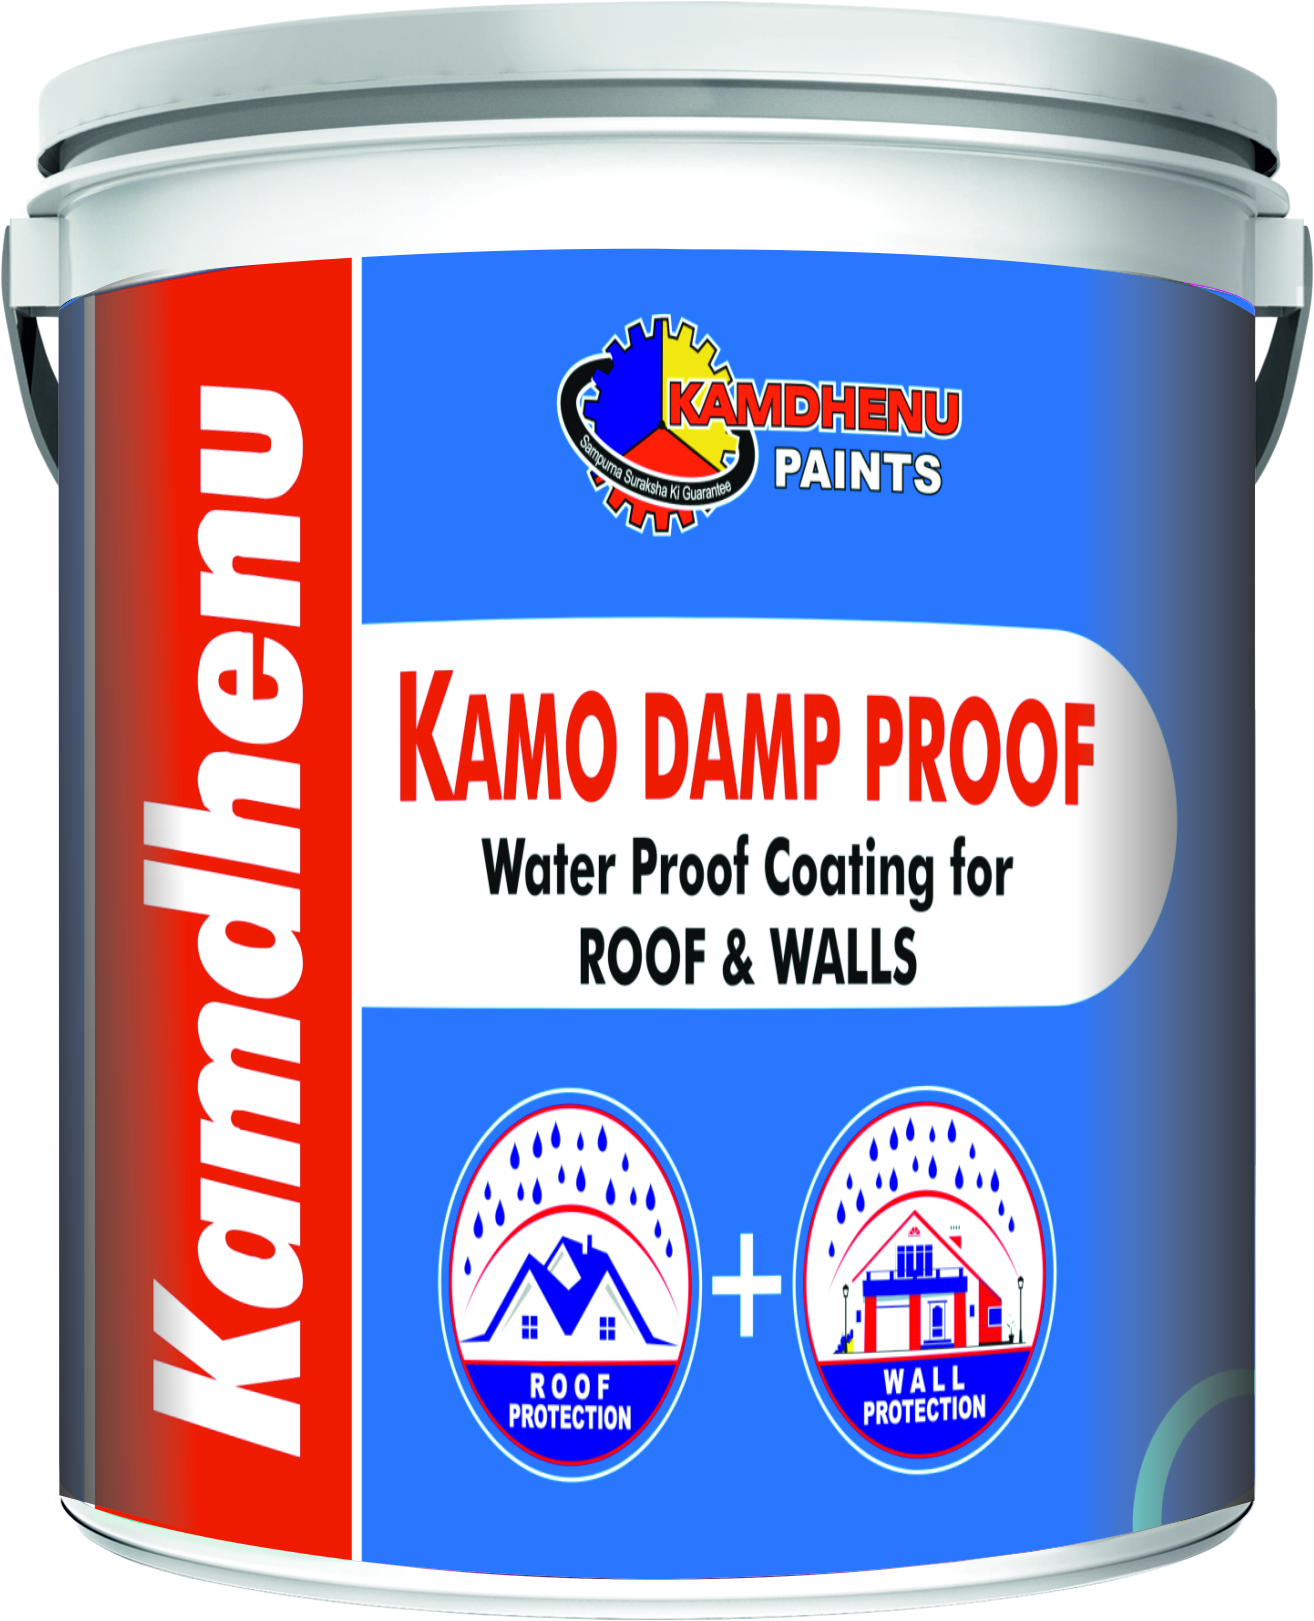 Kamdhenu Paints Launches New Waterproofing Product - ‘Kamo Damp Proof’